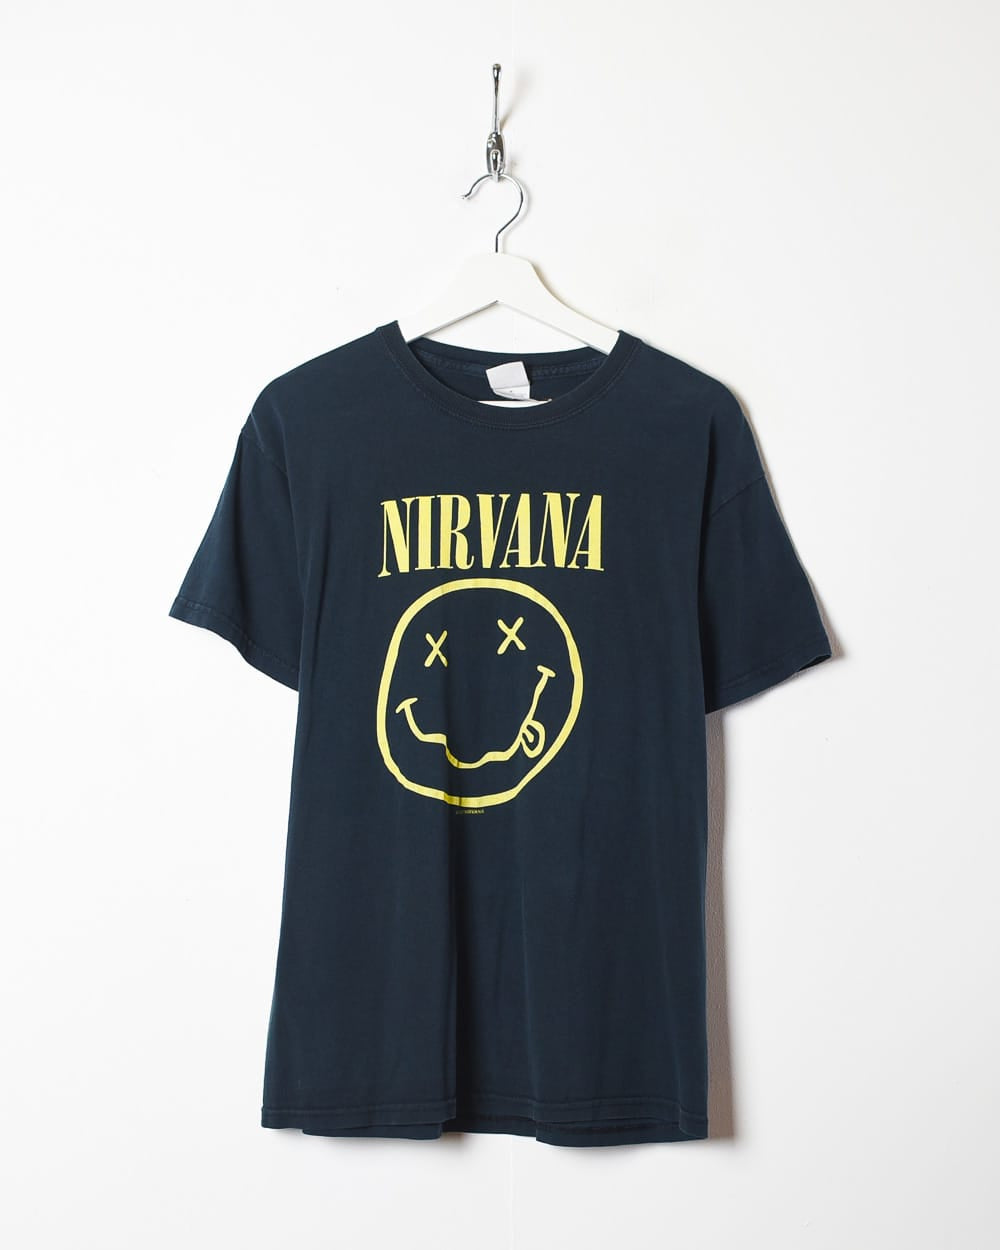 Black Nirvana Graphic T-Shirt - Medium